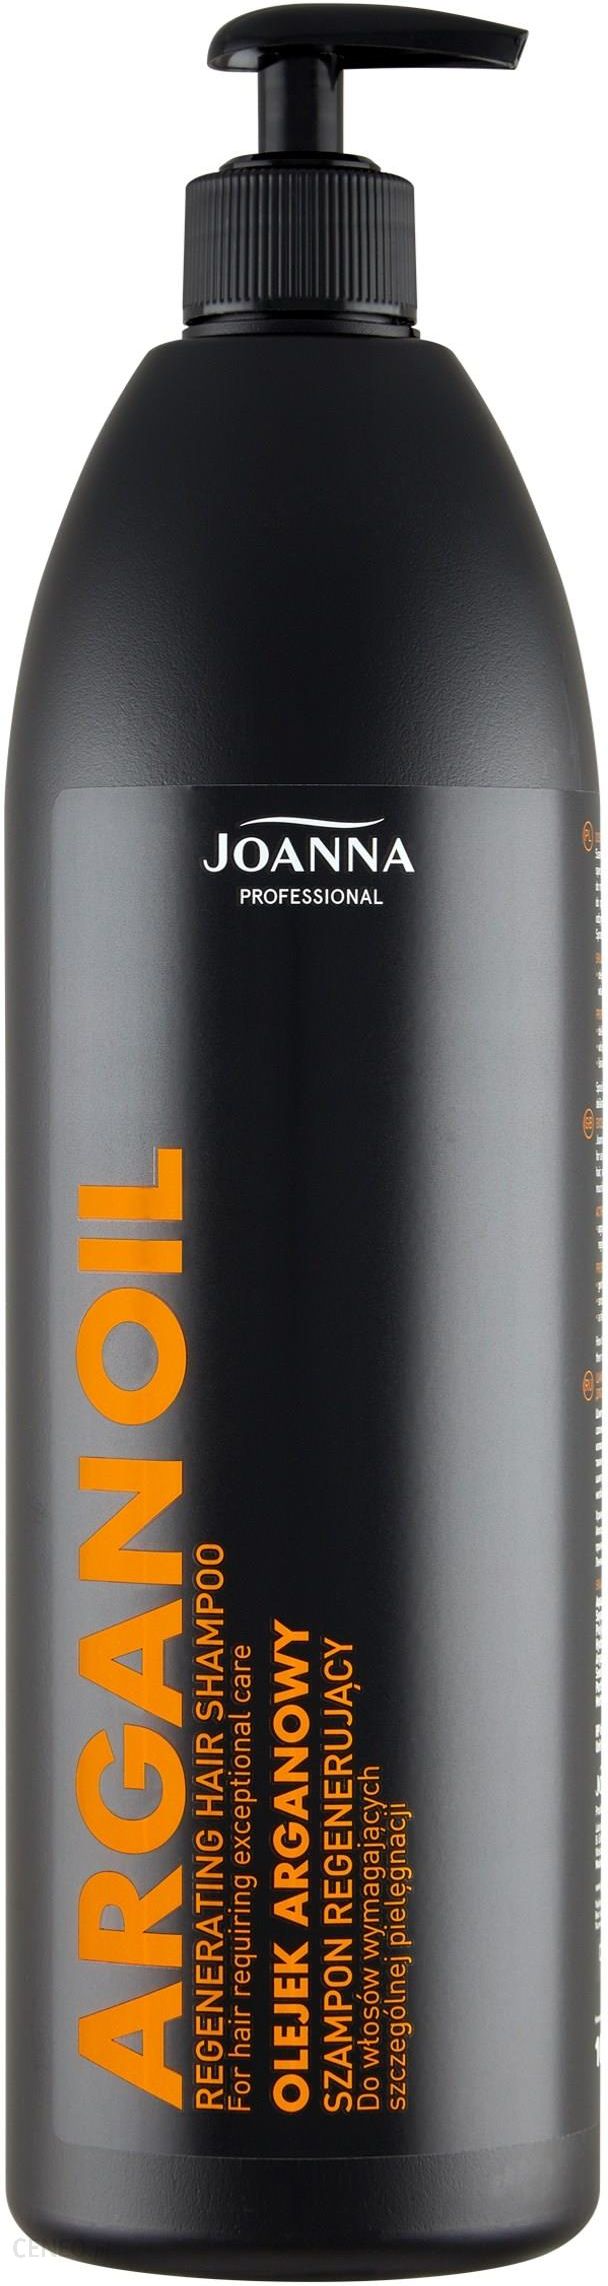 szampon joanna argan oil opinie